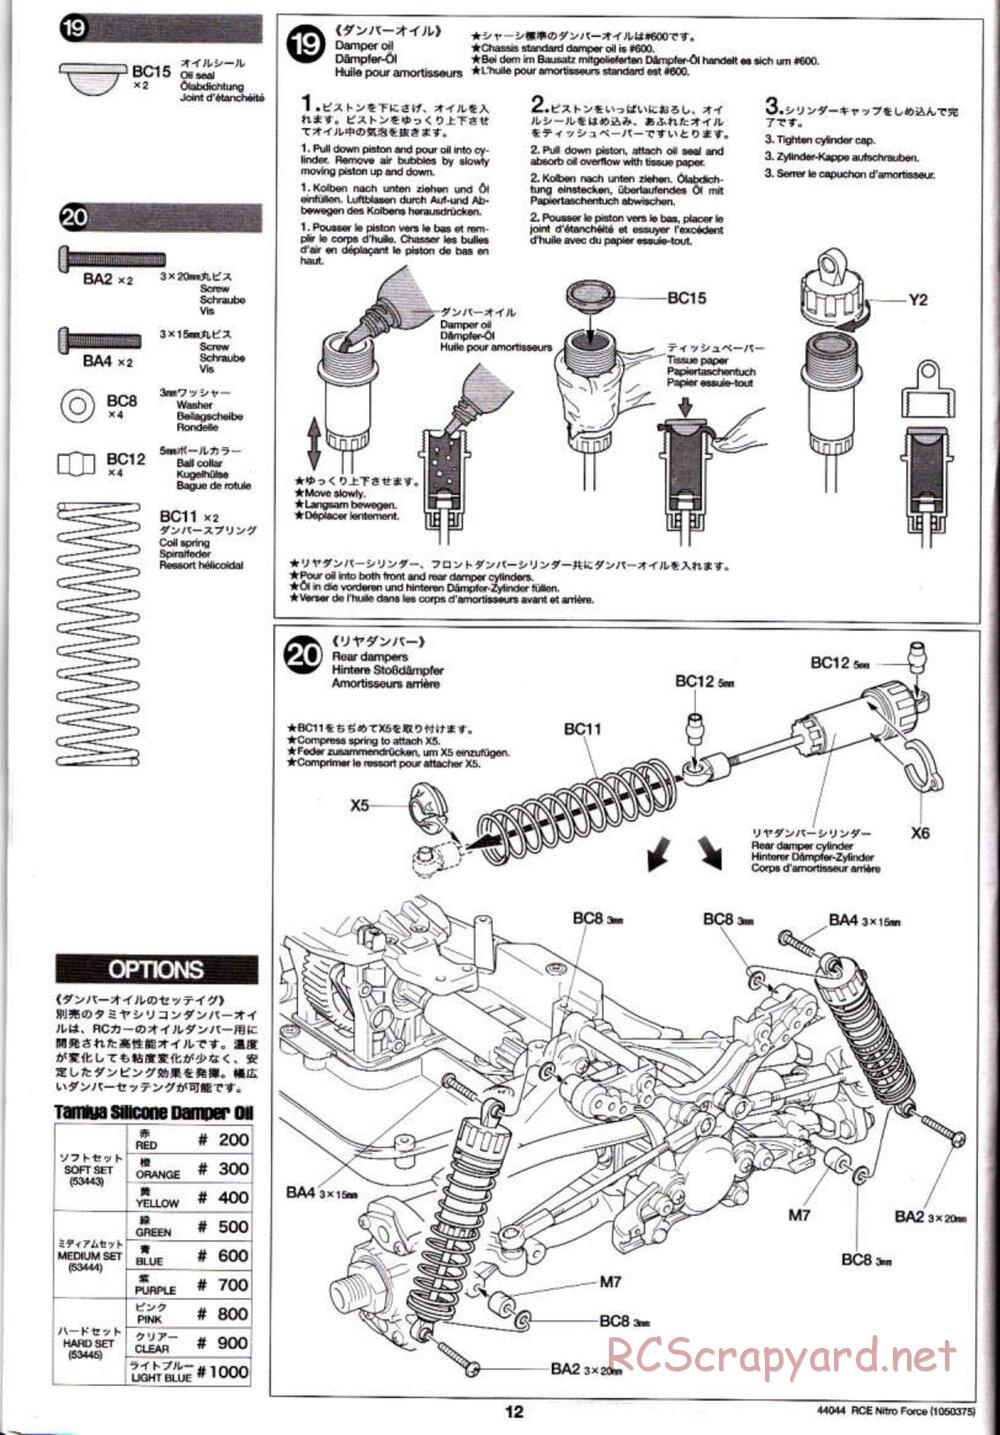 Tamiya - Nitro Force - NDF-01 Chassis - Manual - Page 12